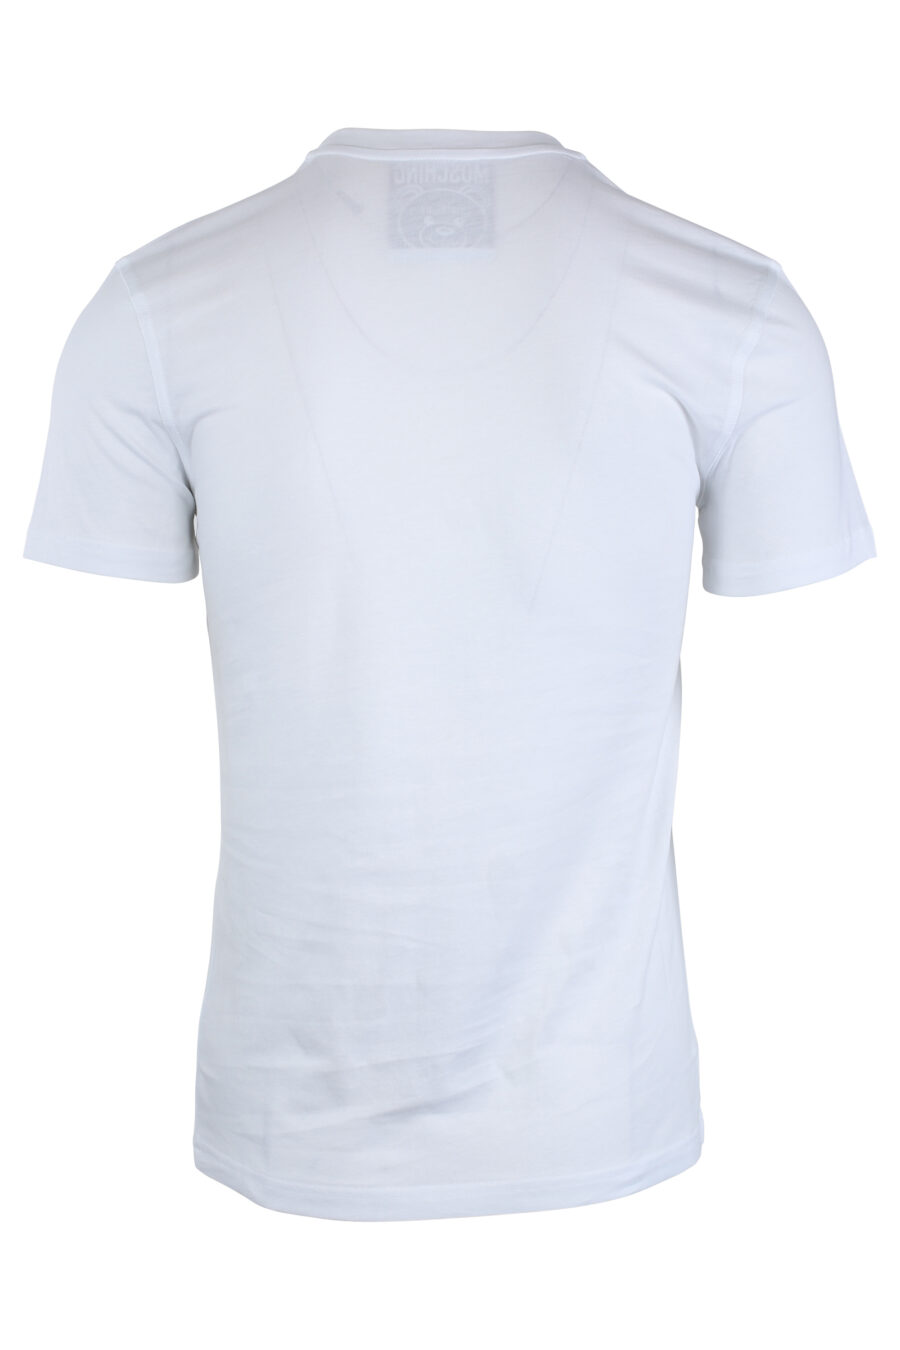 T-shirt blanc avec ours monochrome maxilogo - IMG 1654